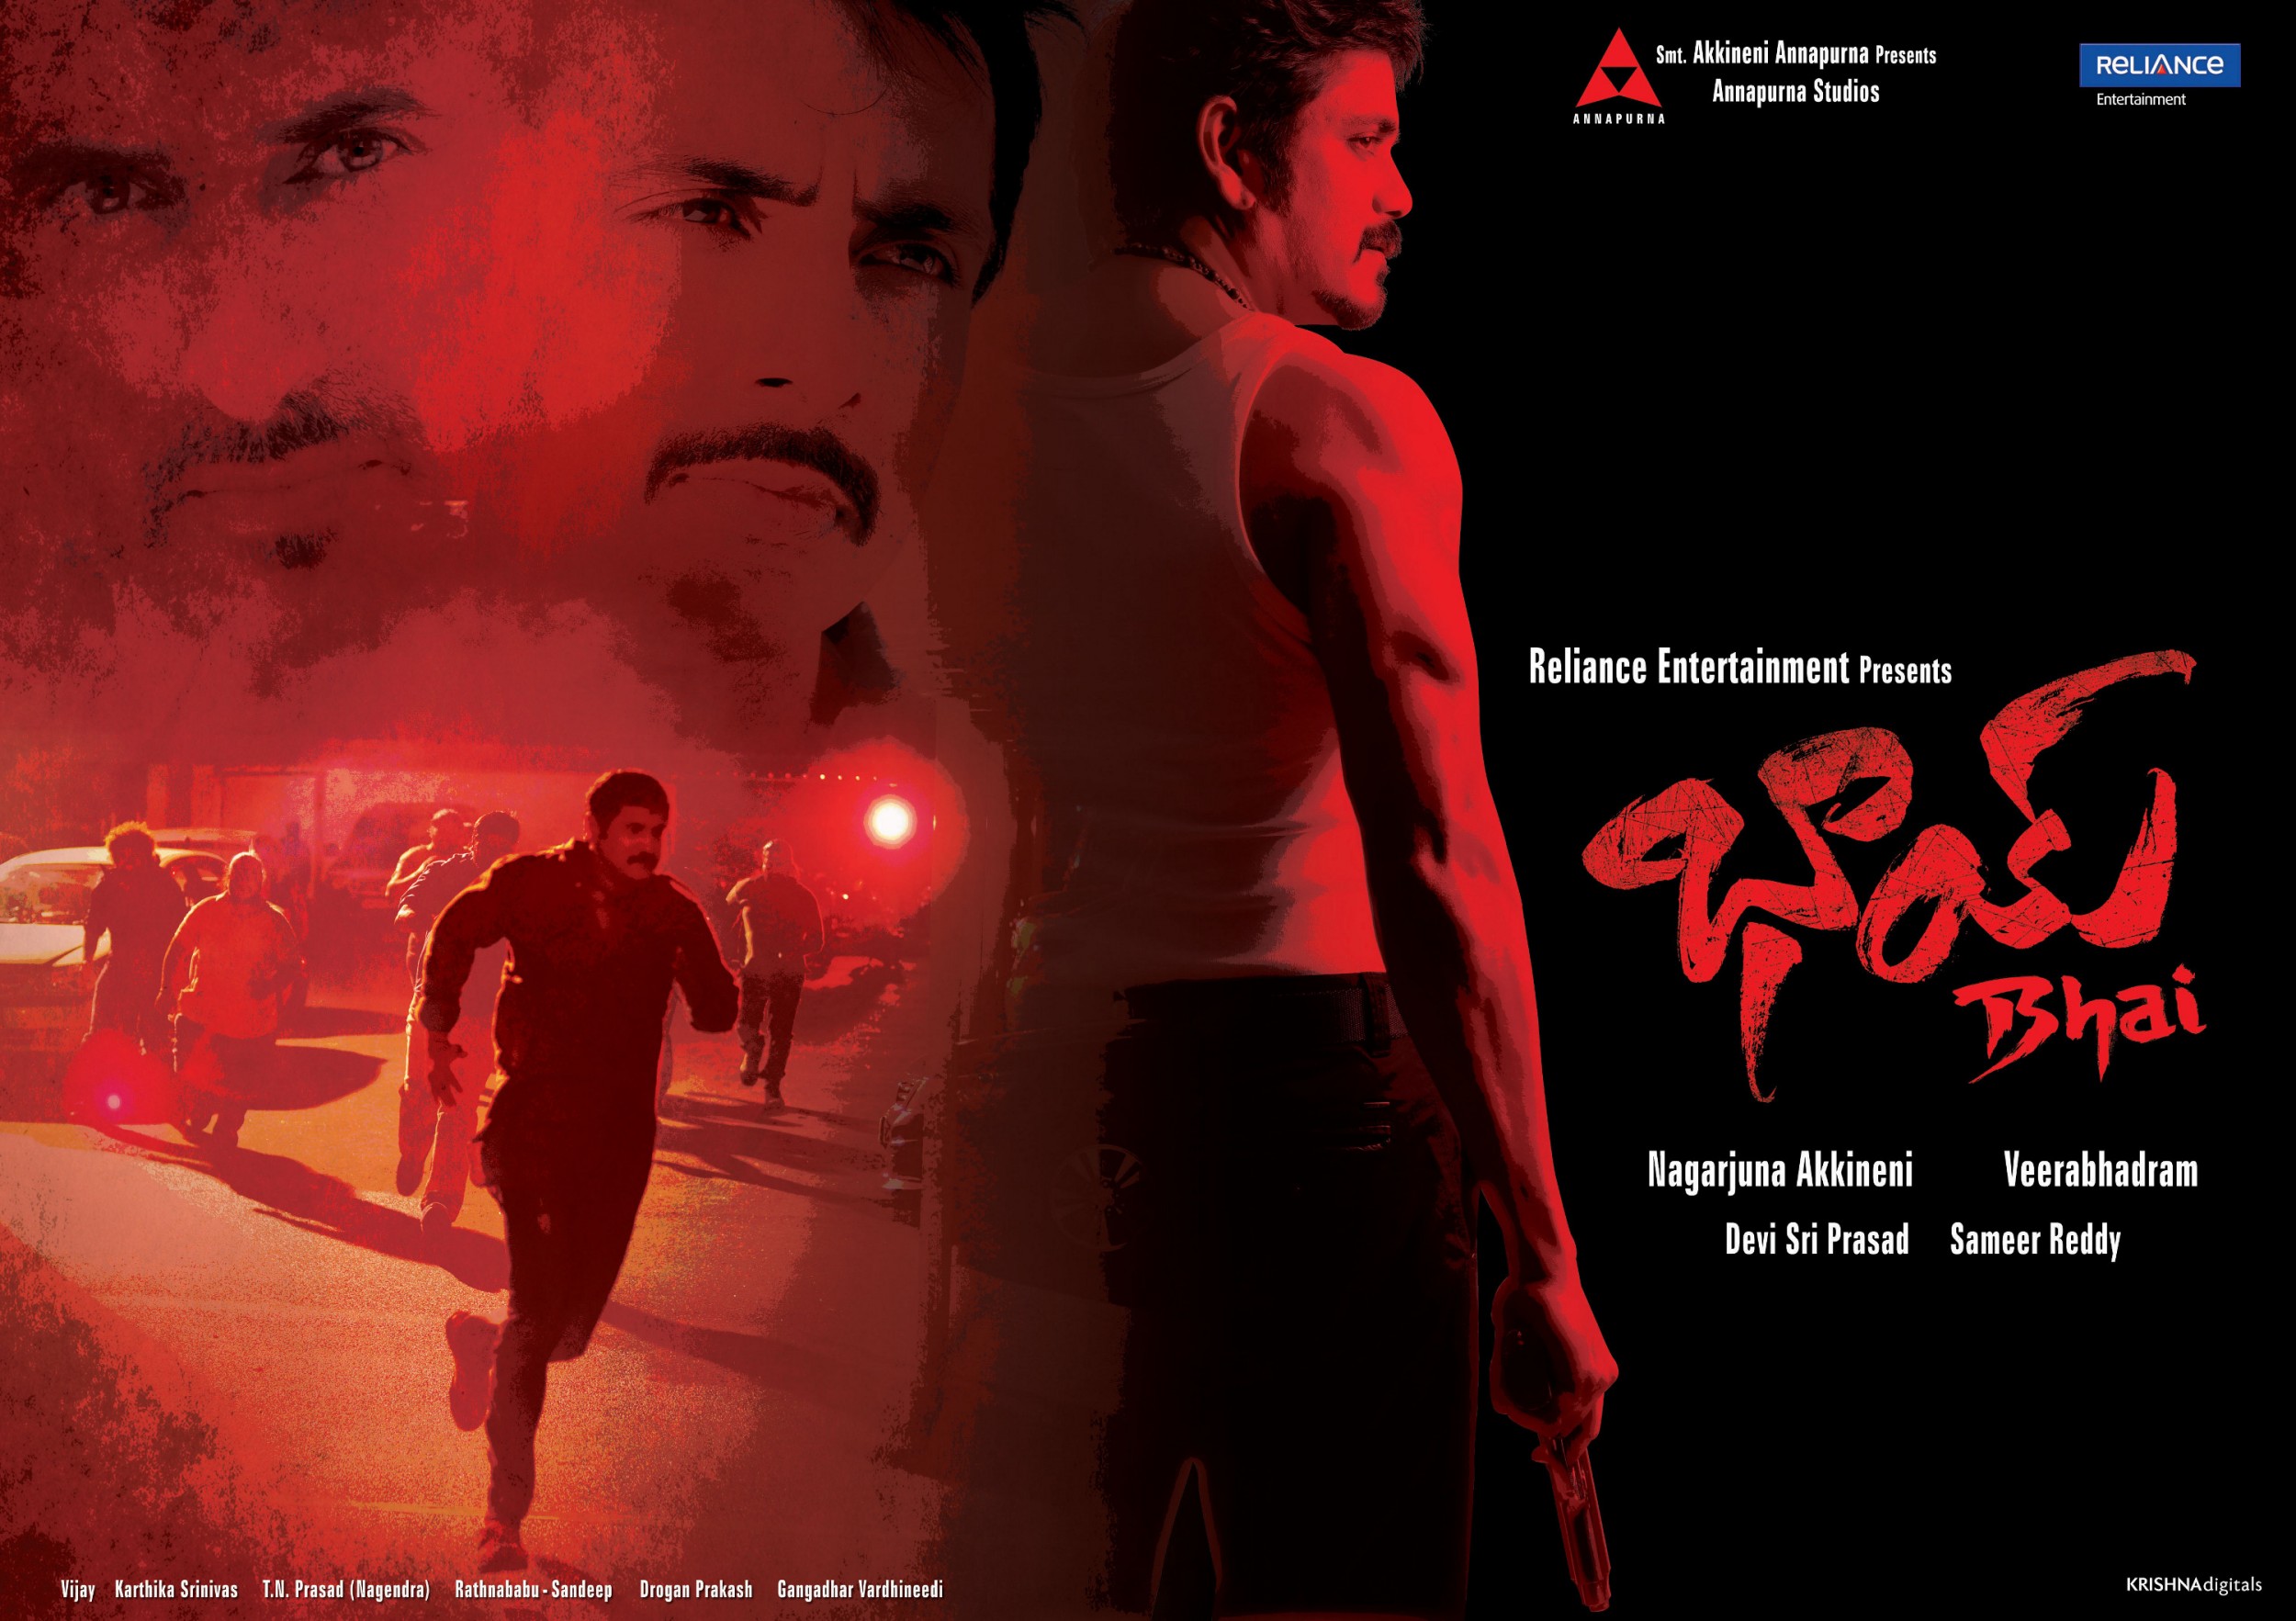 Mega Sized Movie Poster Image for Bhai (#4 of 7)